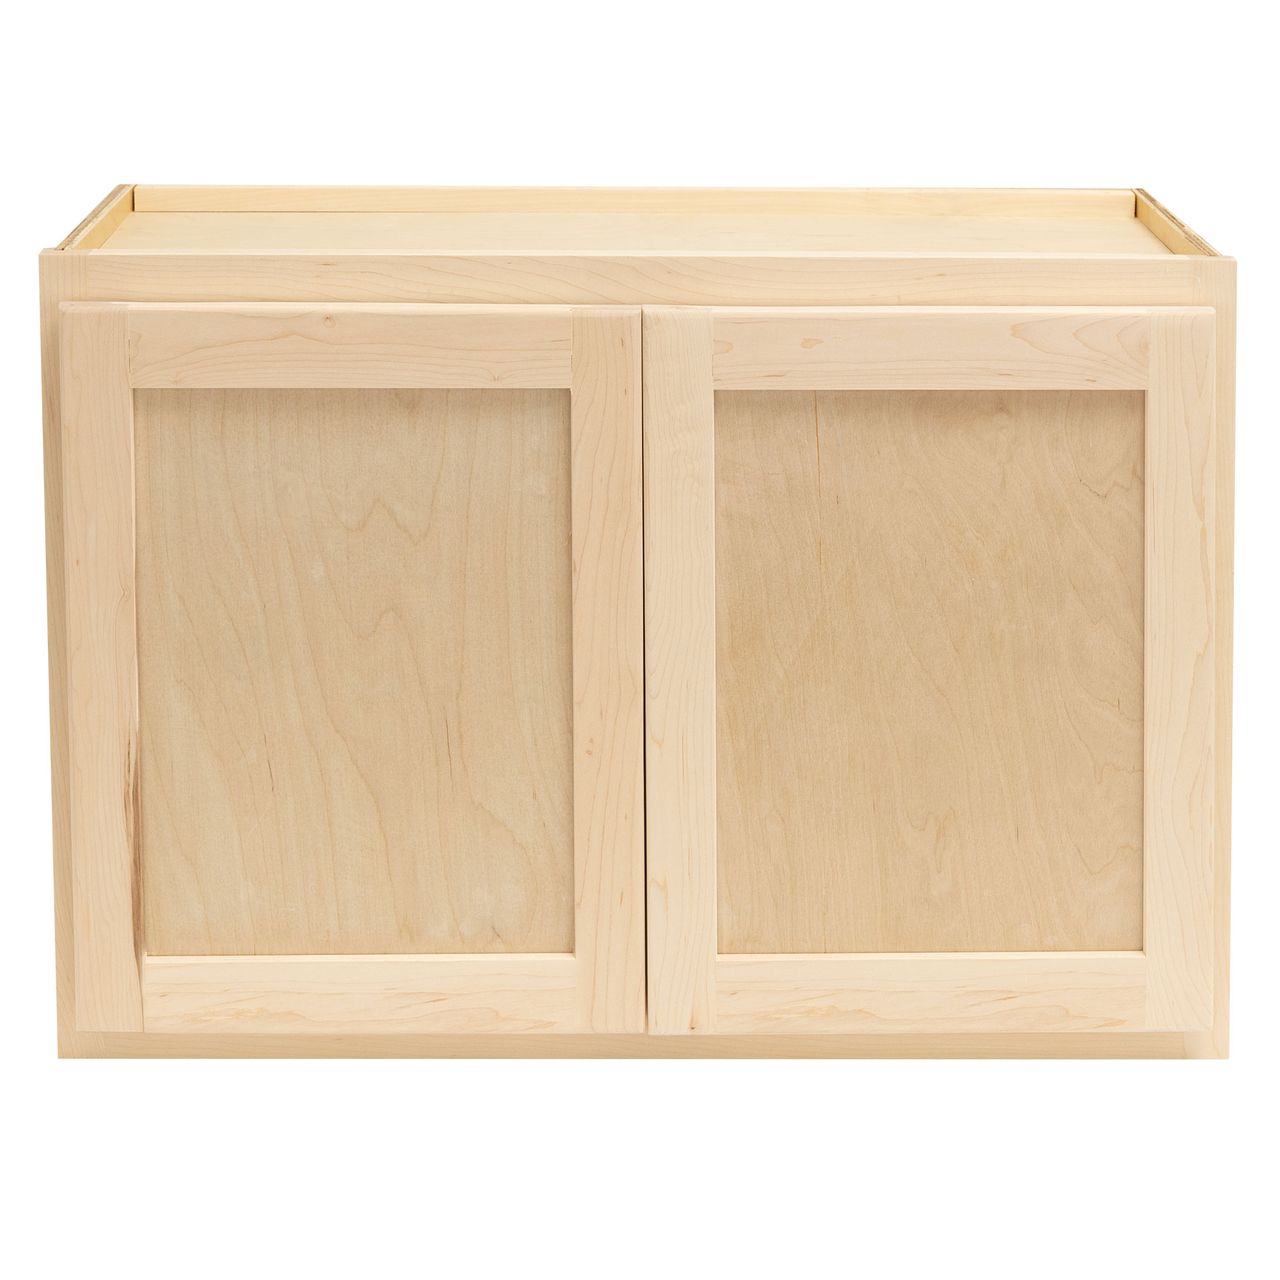 Quicklock RTA (Ready-to-Assemble) Raw Maple Wall Cabinet Refrigerator - 36"W x (12", 18", 24"H) x 12"D